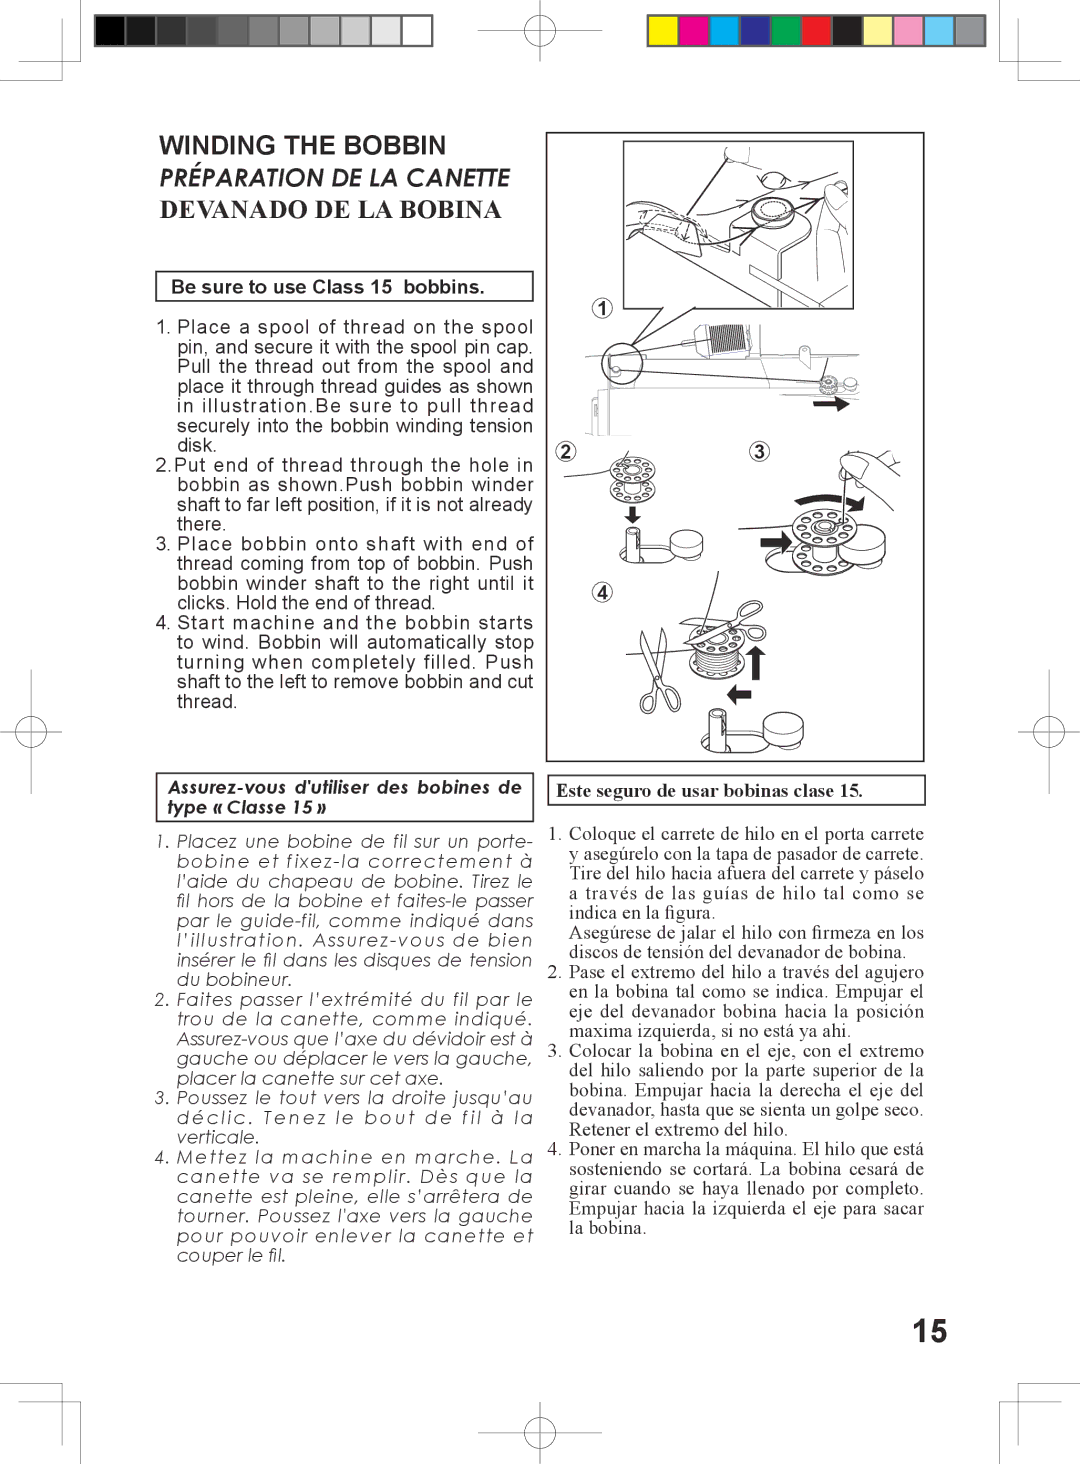 Singer 5400 instruction manual Winding the Bobbin, Devanado DE LA Bobina 